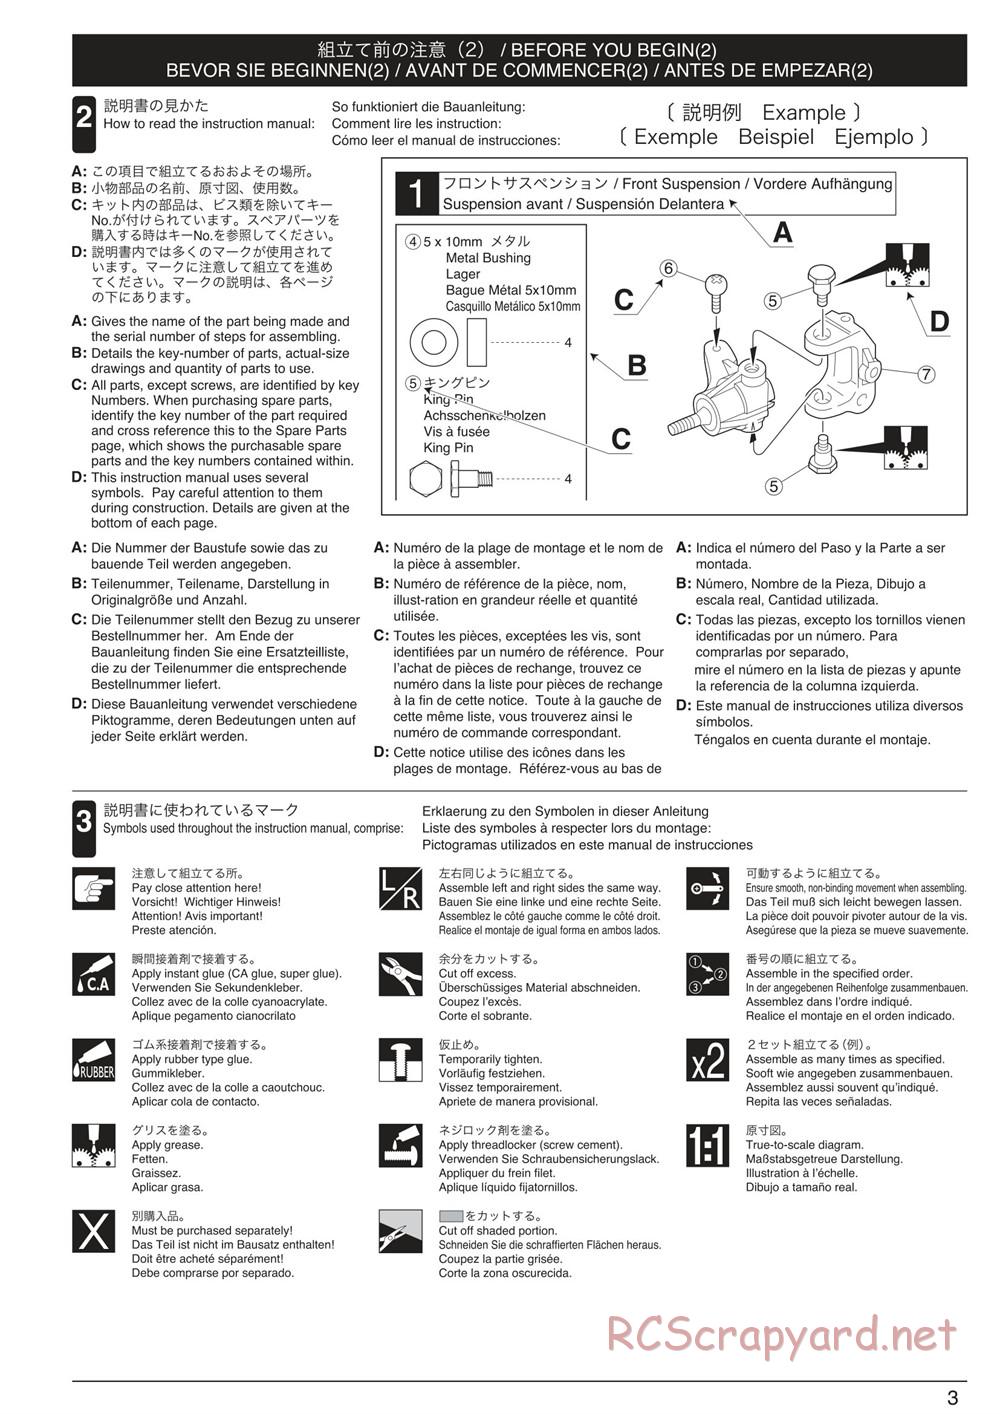 Kyosho - DRT - Manual - Page 3